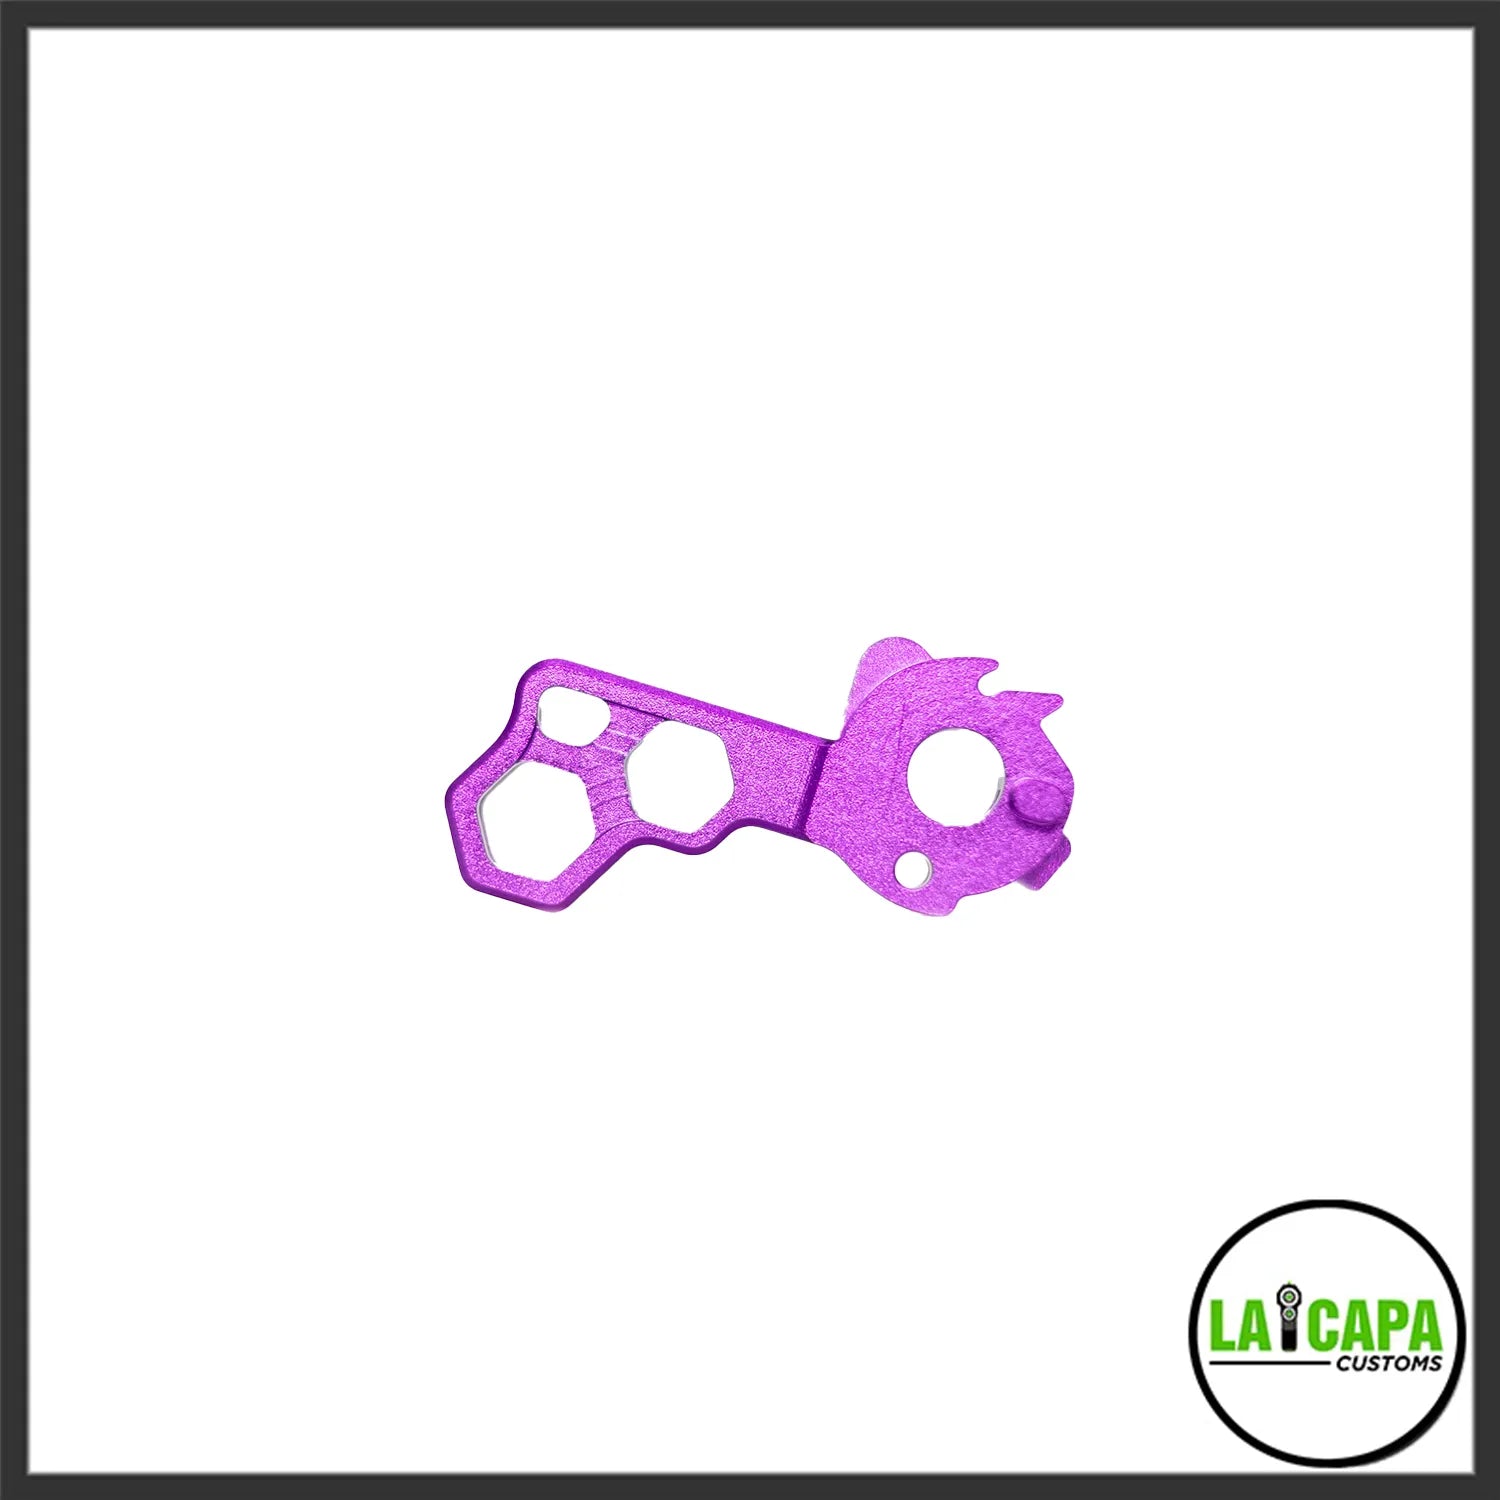 LA Capa Customs “HIVE” Duralumin Hammer for Hi Capa - Purple